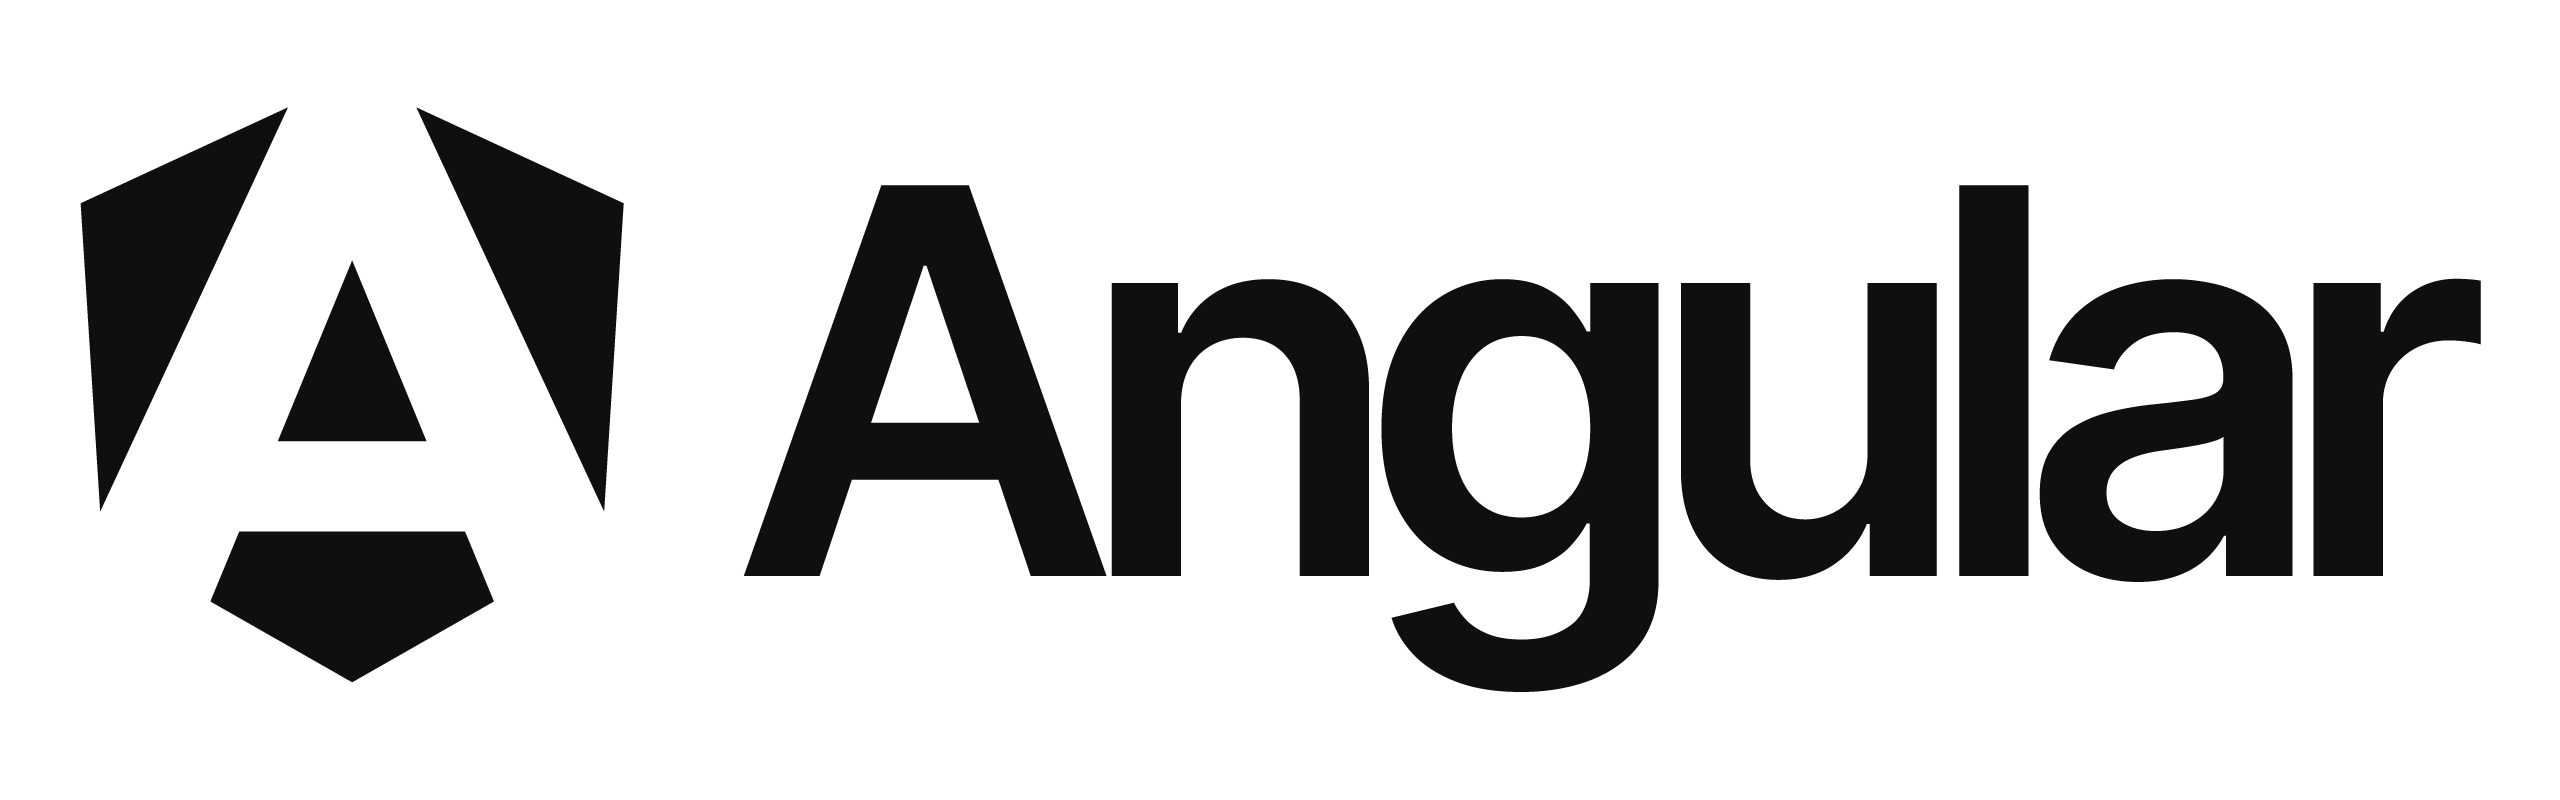 Angular wordmark black logo